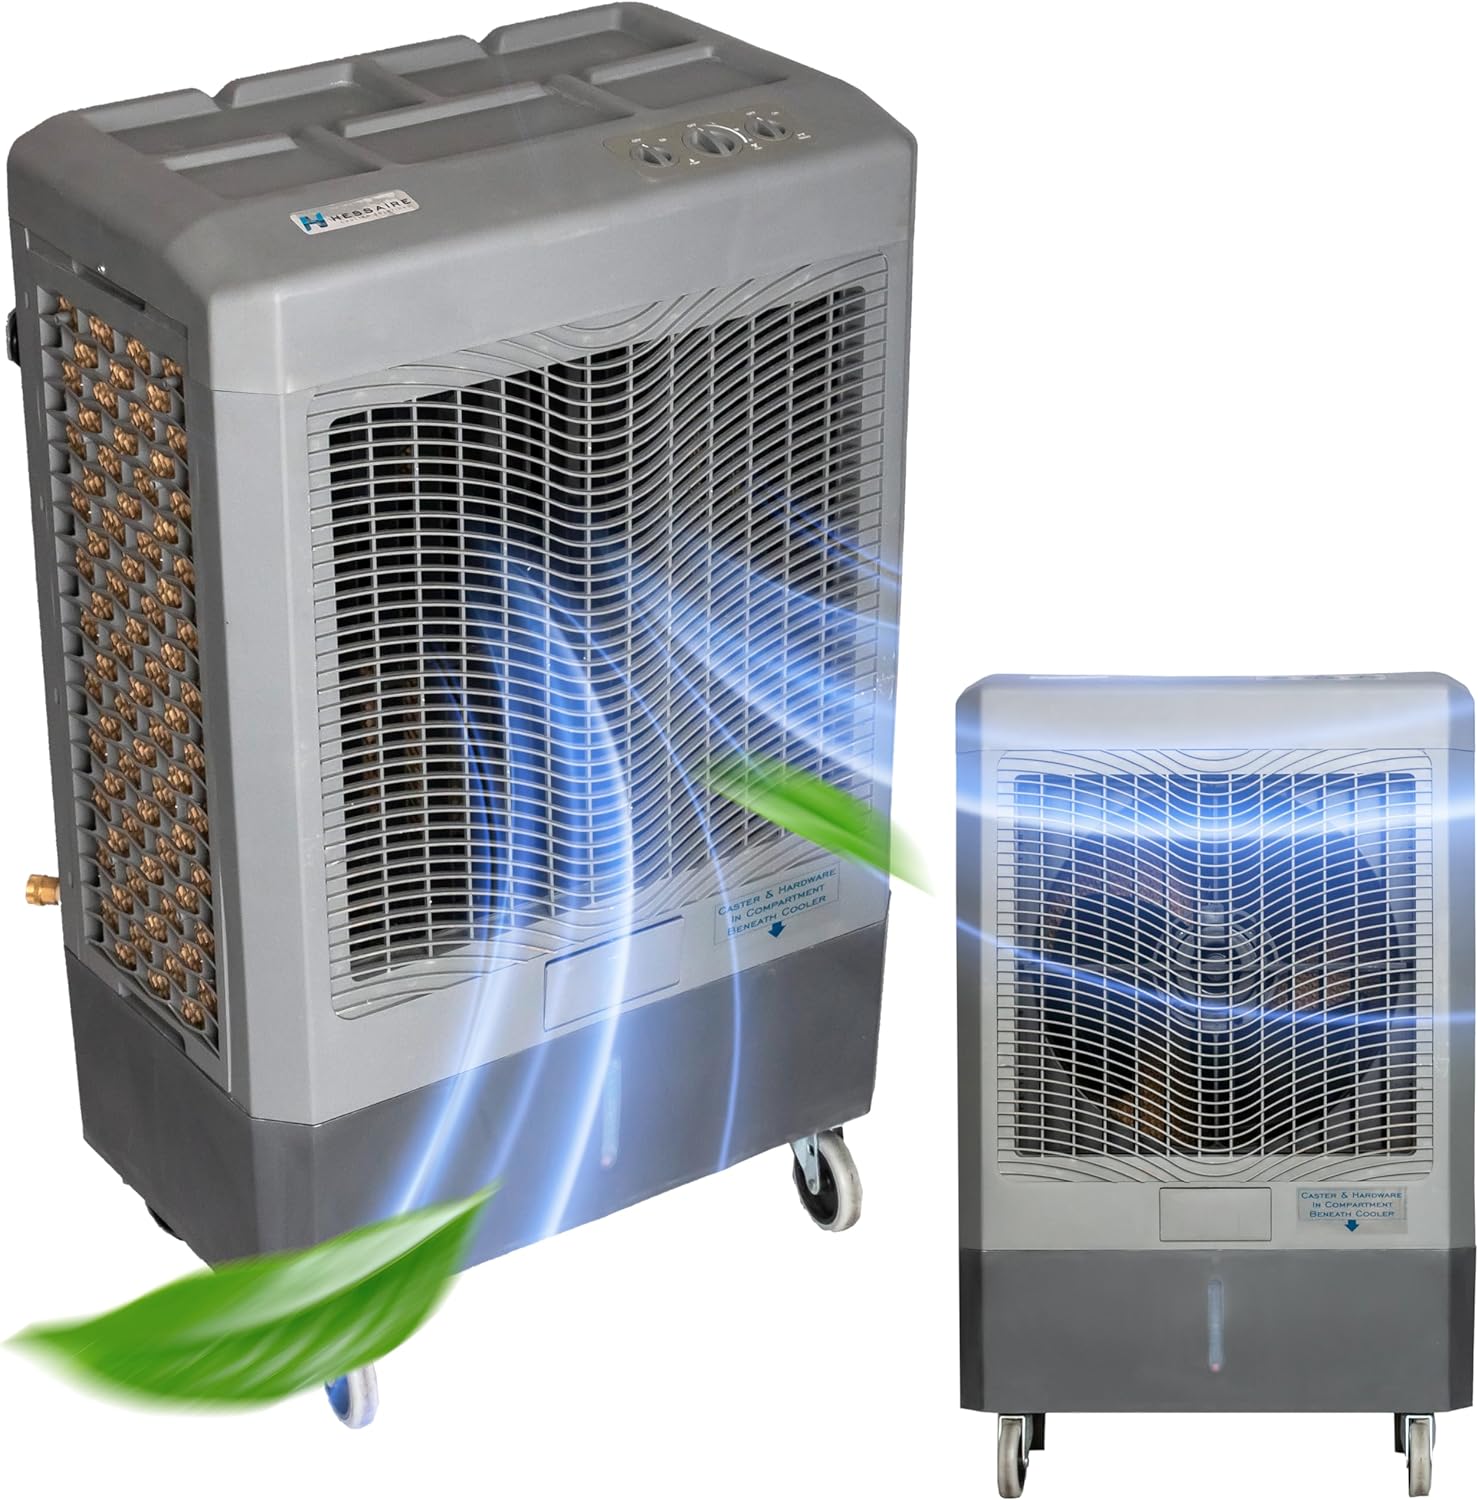 Portable Swamp Coolers - 5300 CFM MC61M Evaporative Air Cooler - $420